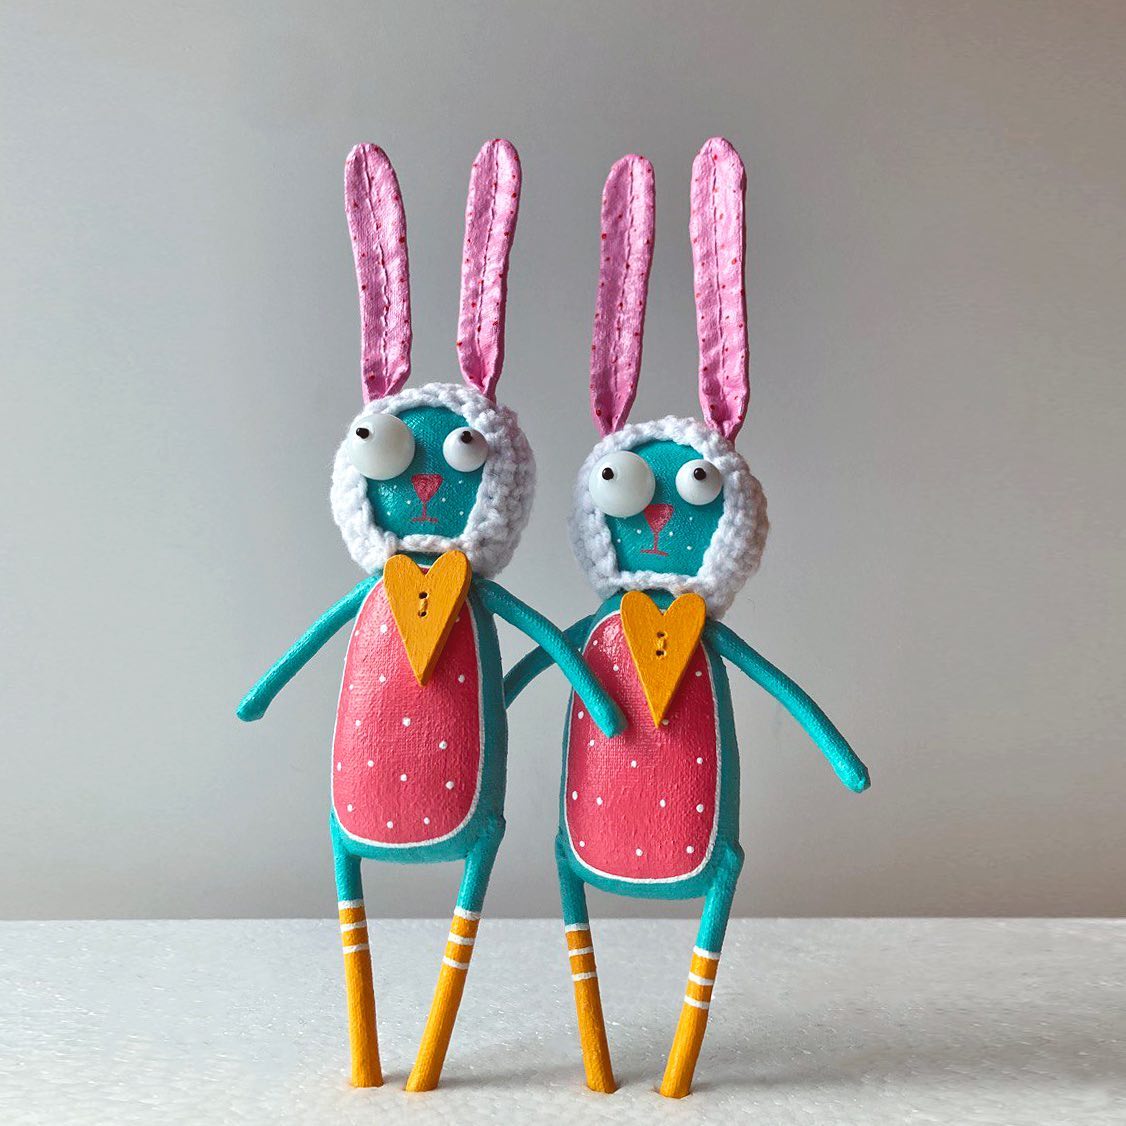 Colorful Handmade Toys Of Quirky Creatures By Lidiya Marinchuk (1)